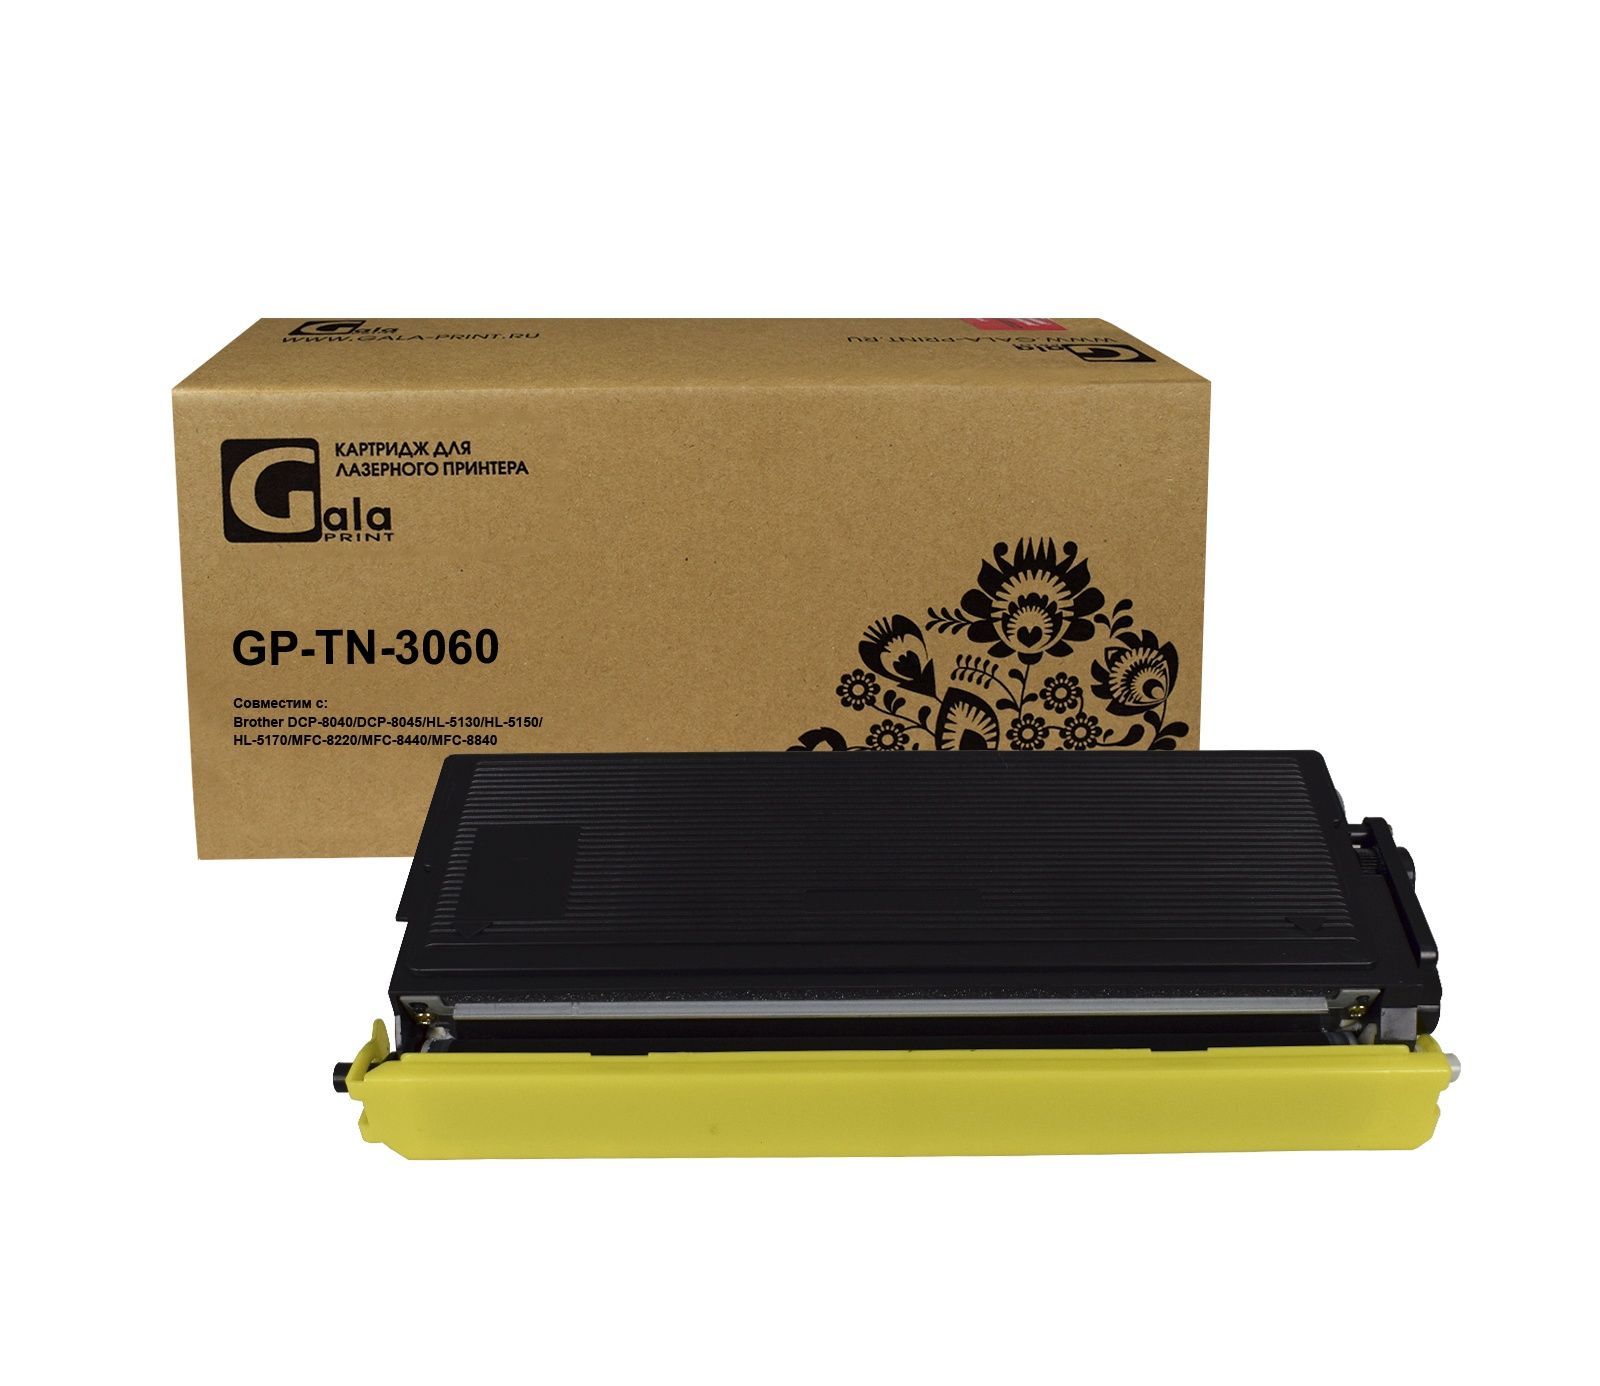 Картридж GP-TN-3060 для принтеров Brother DCP-8040/DCP-8045/HL-5130/HL-5150/HL-5170/MFC-8220/MFC-8440/MFC-8840 6700 копий GalaPrint